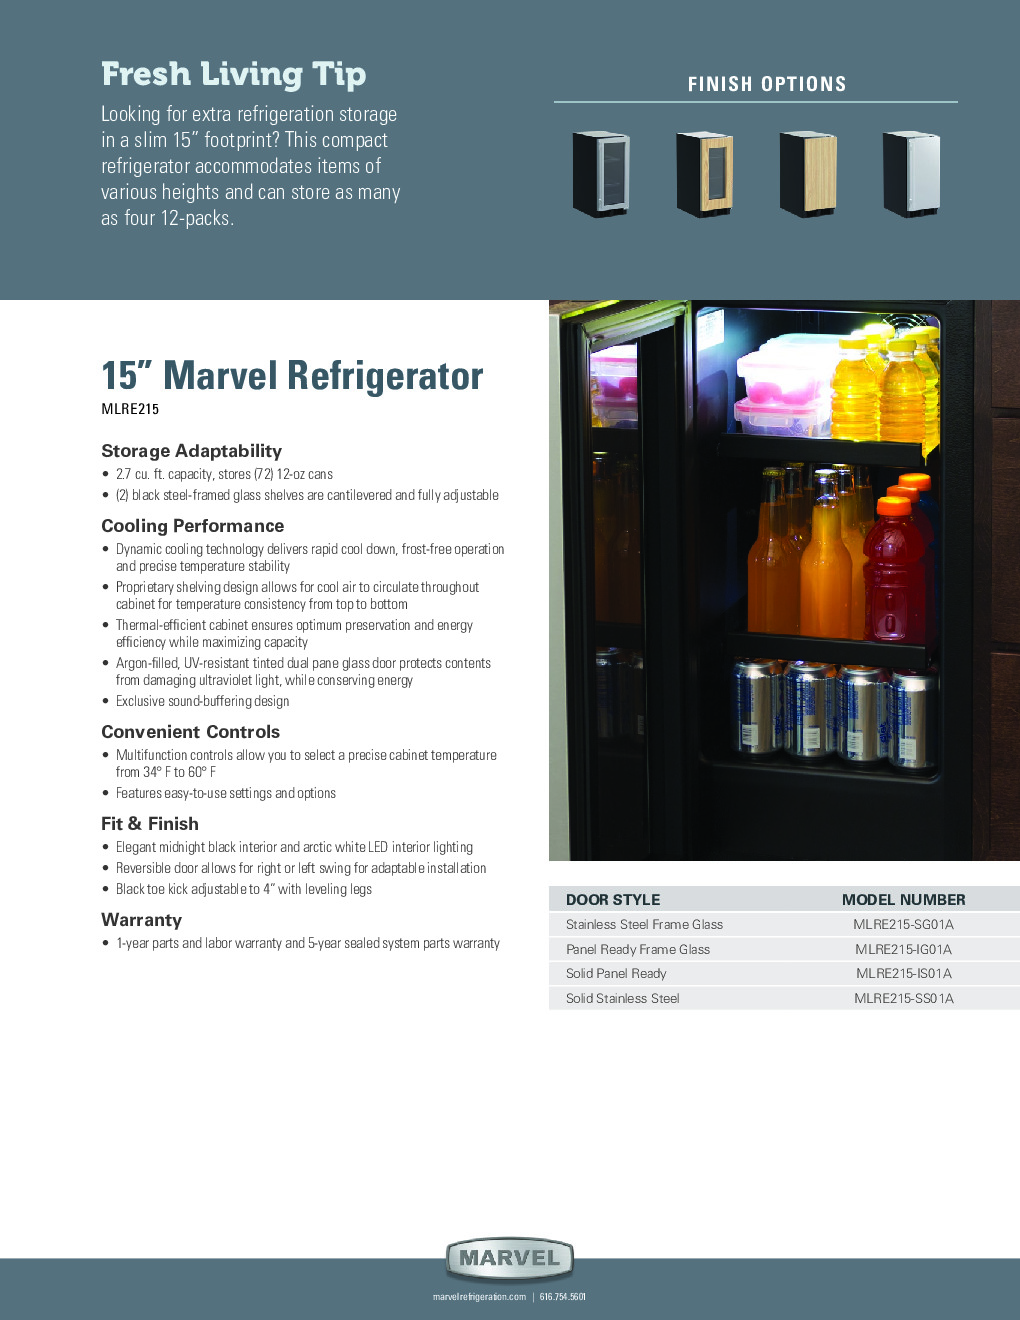 Marvel MLRE215-IG01A 15